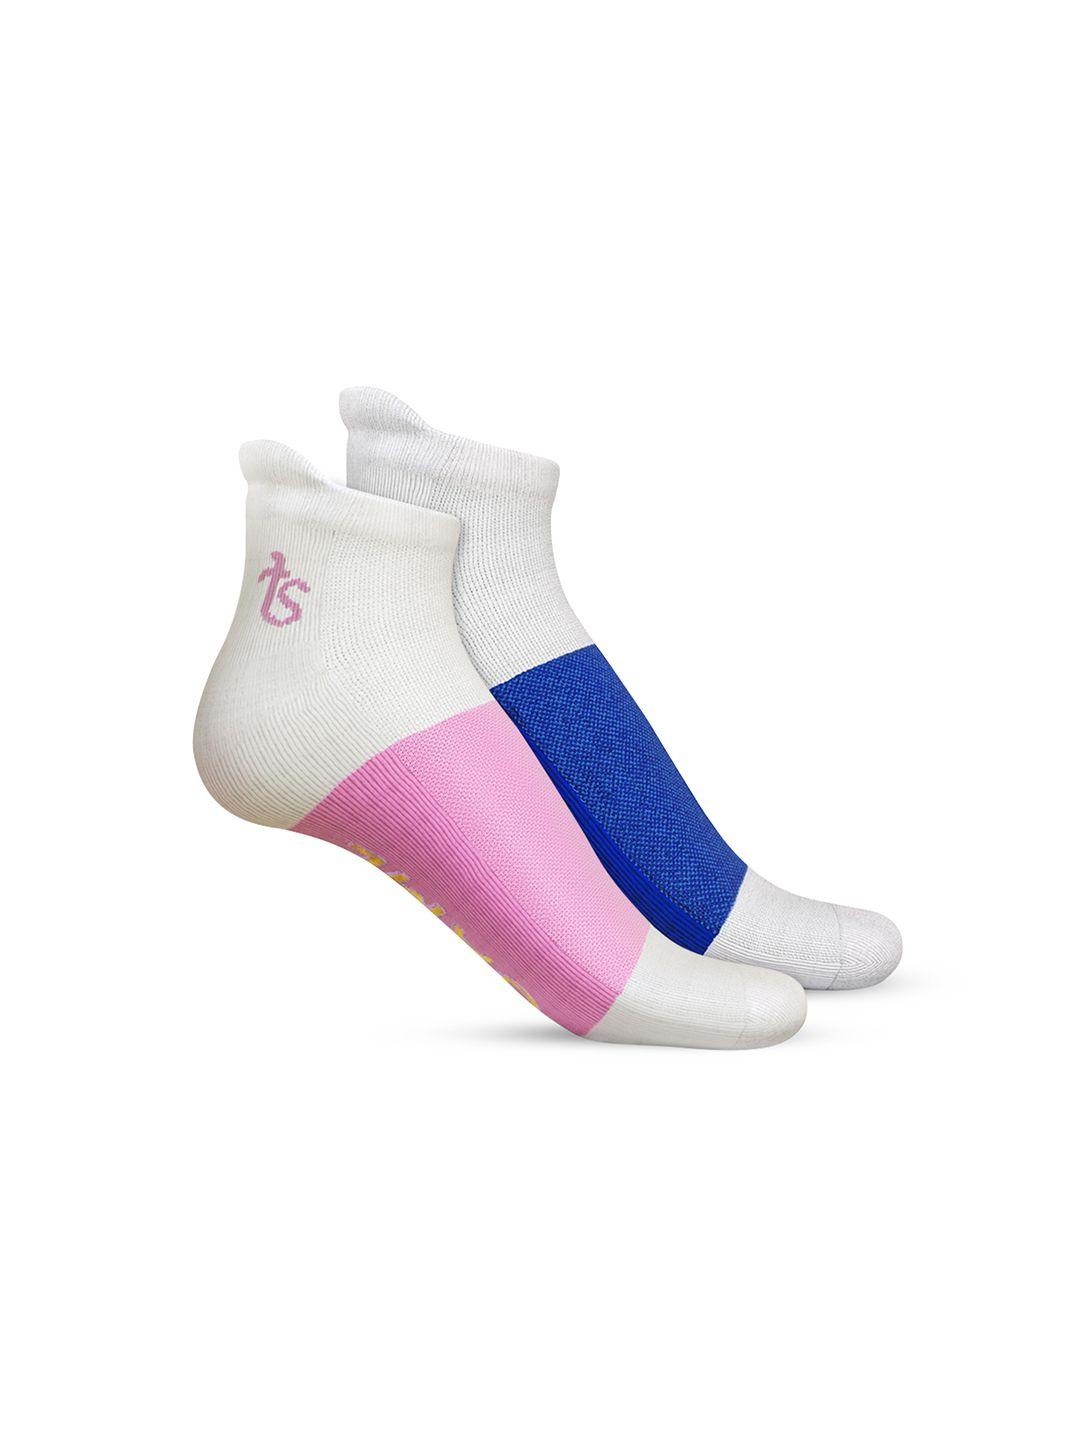 talkingsox pack of 2 patterned moisture wicking ankle length socks